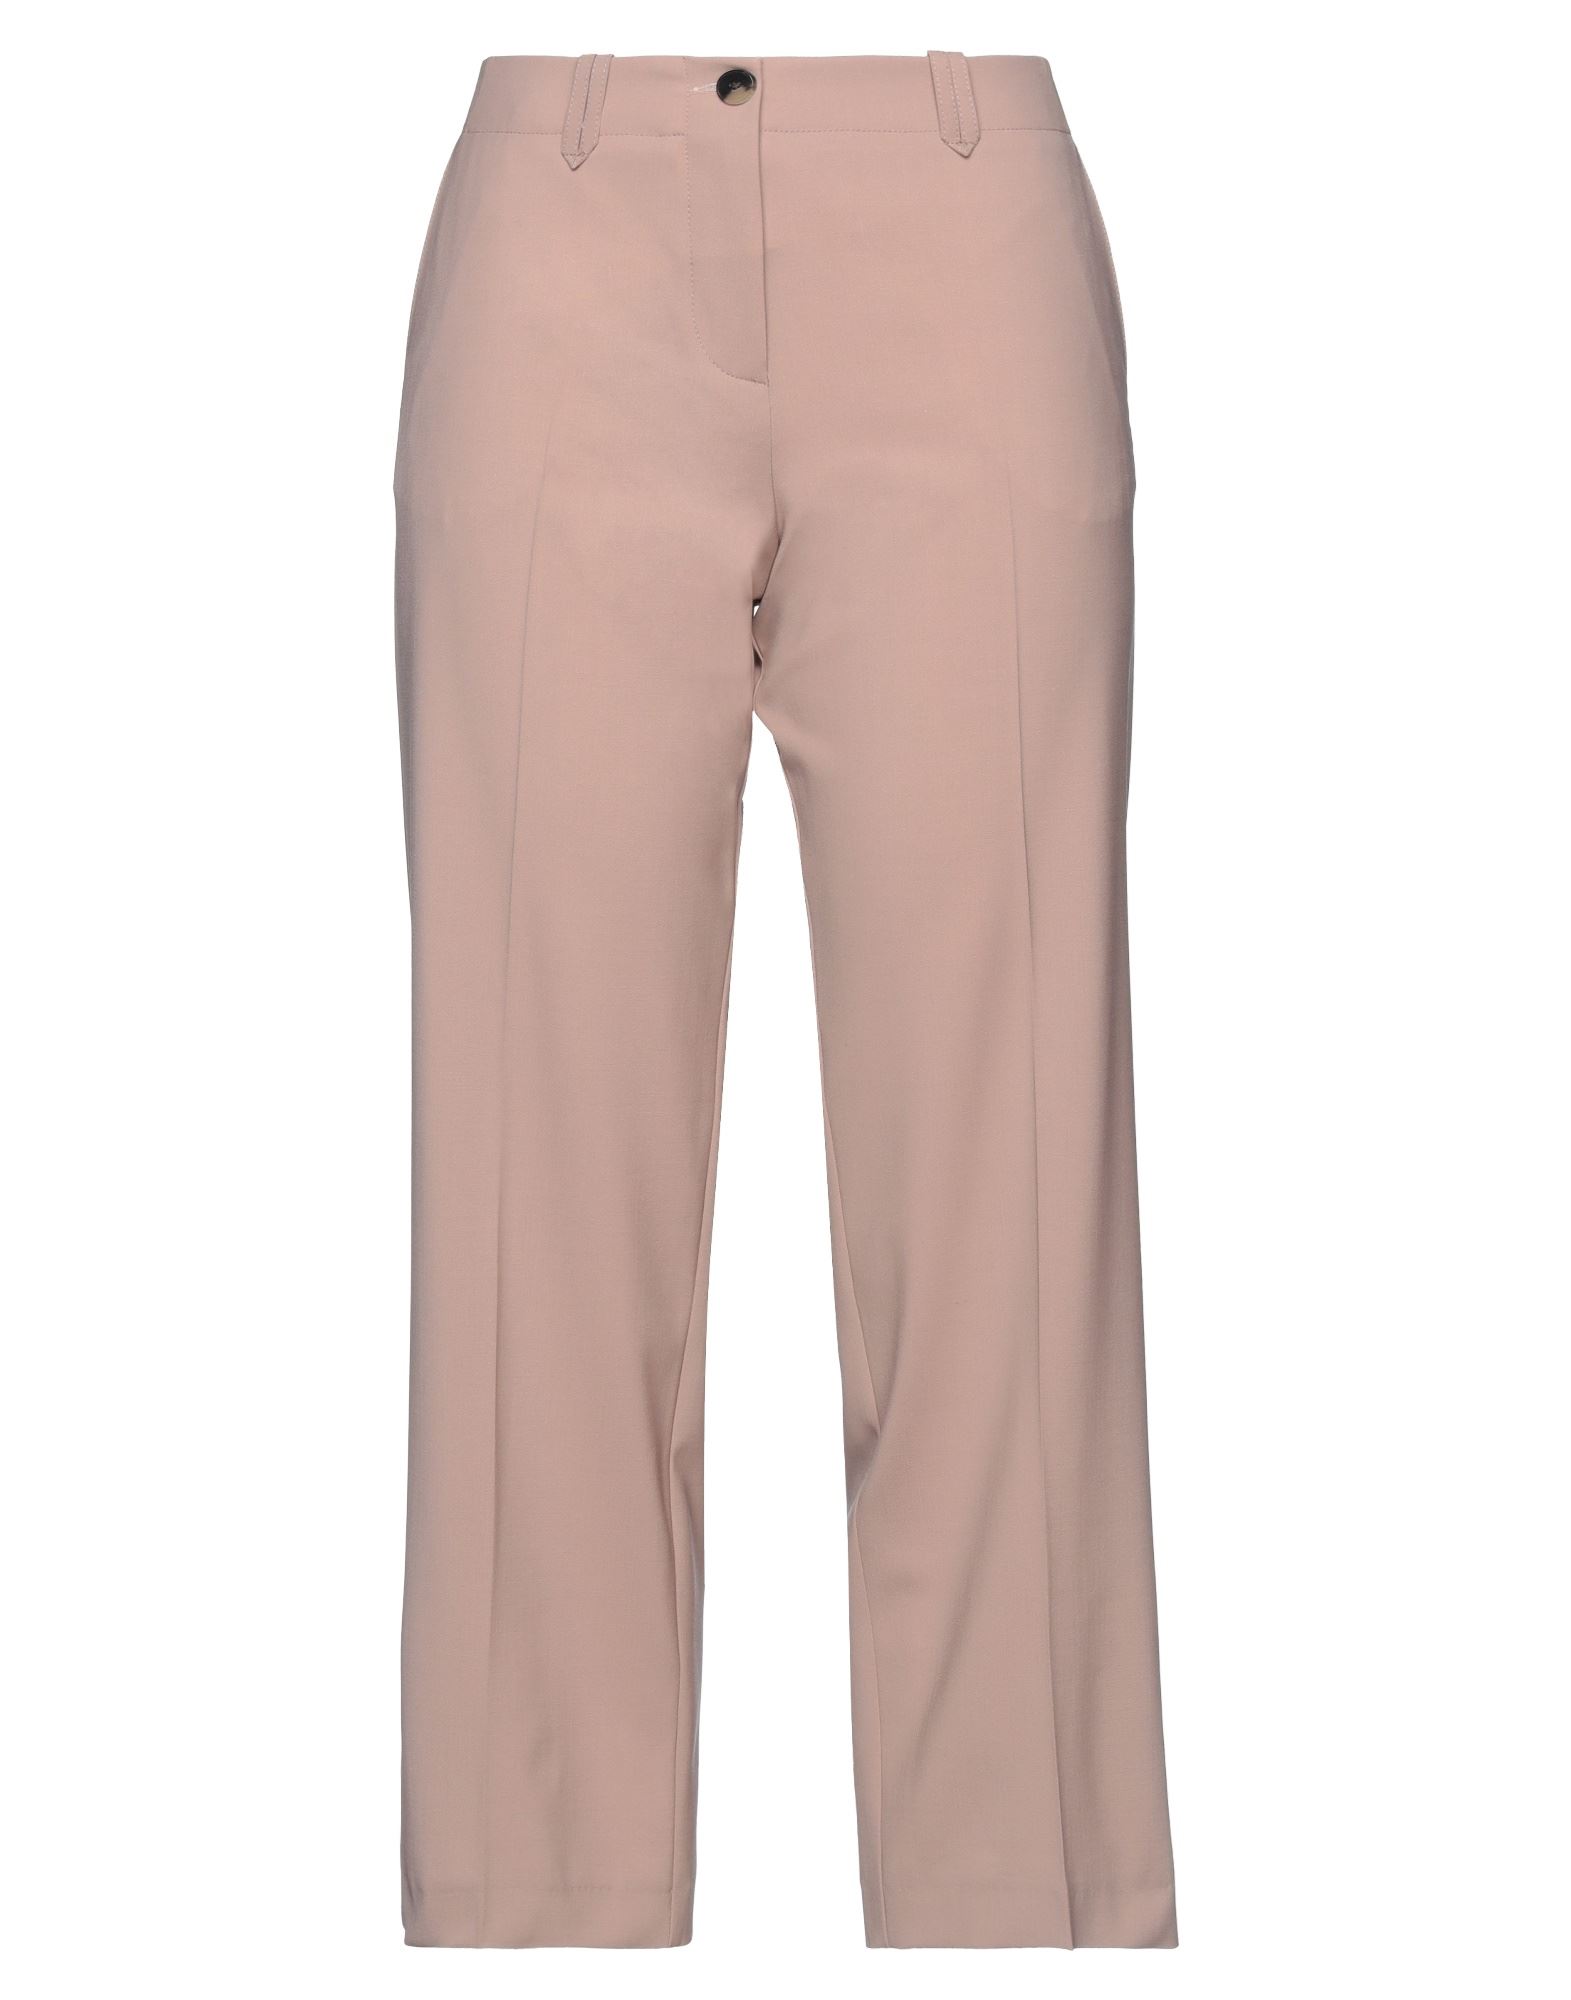 Alysi Pants In Pink